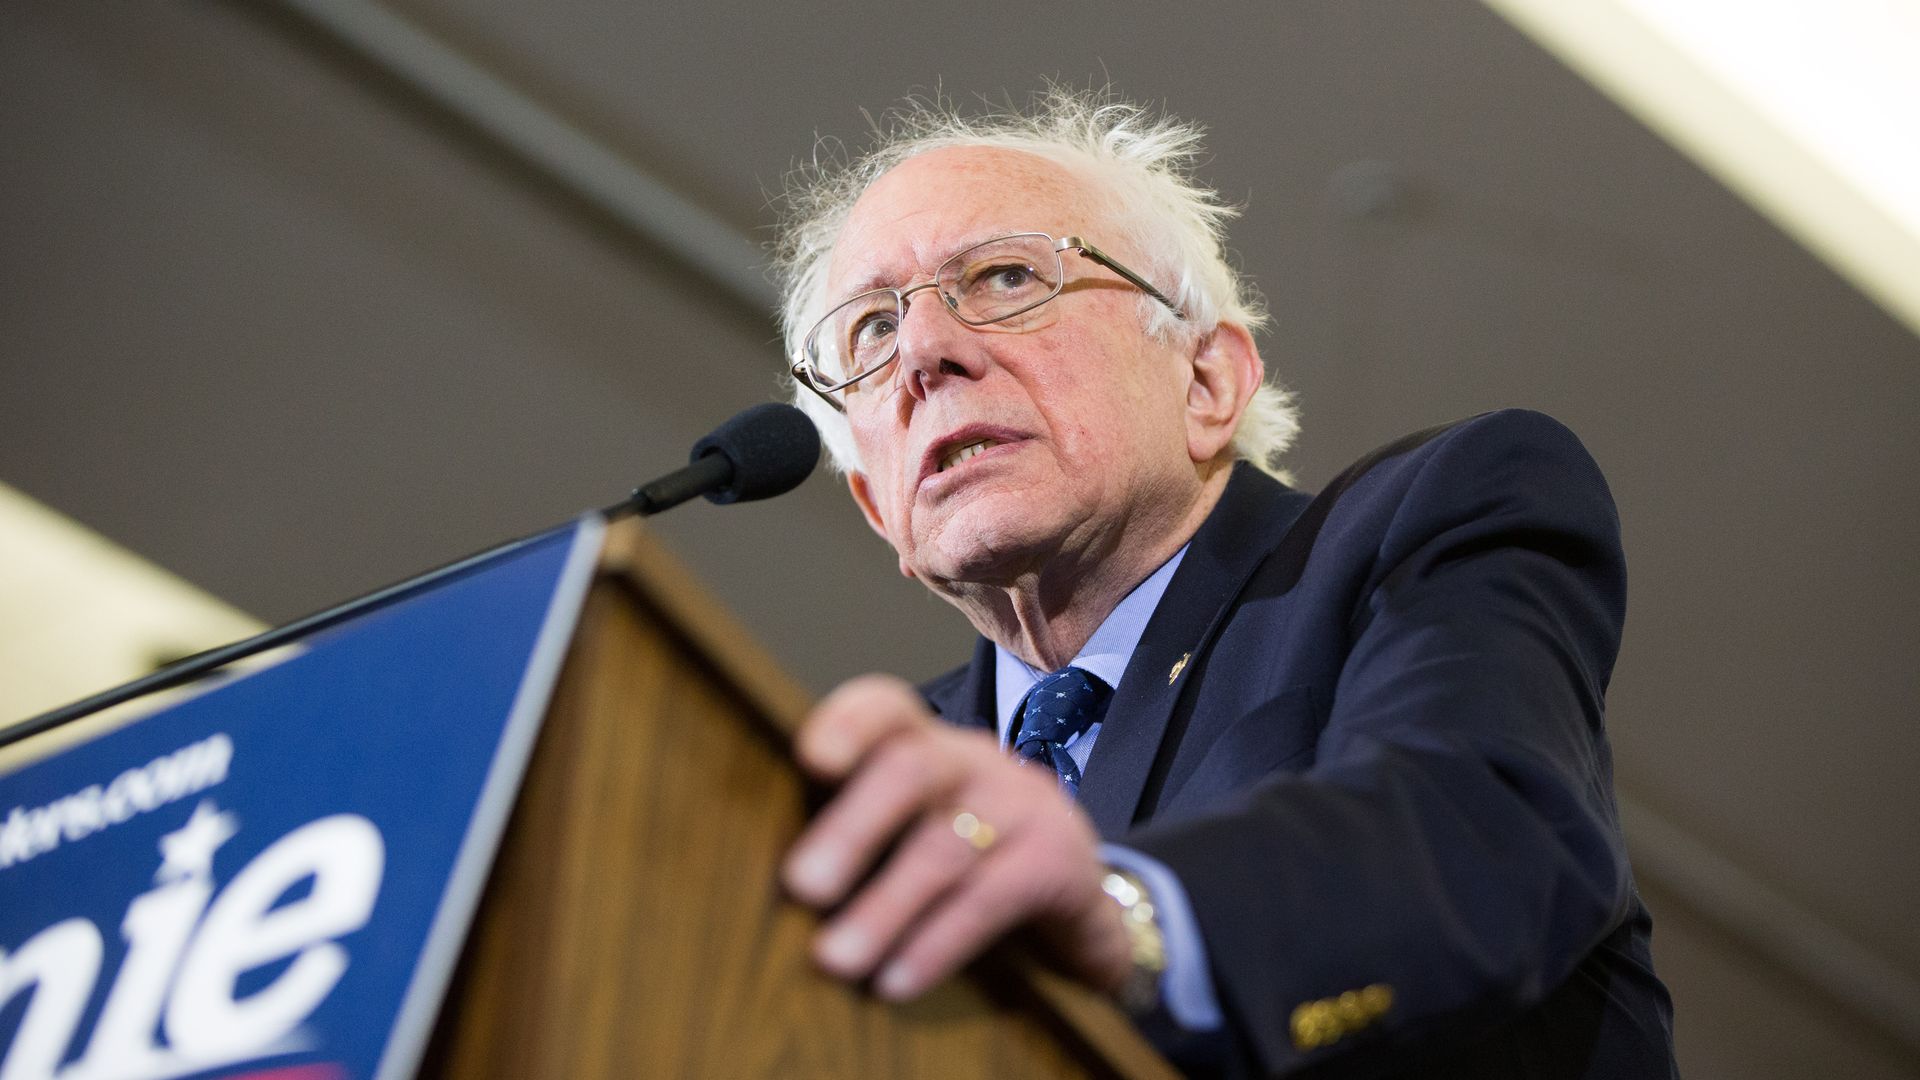 Democratic Presidential hopeful Bernie Sanders says the U.S. must take on the NRA.